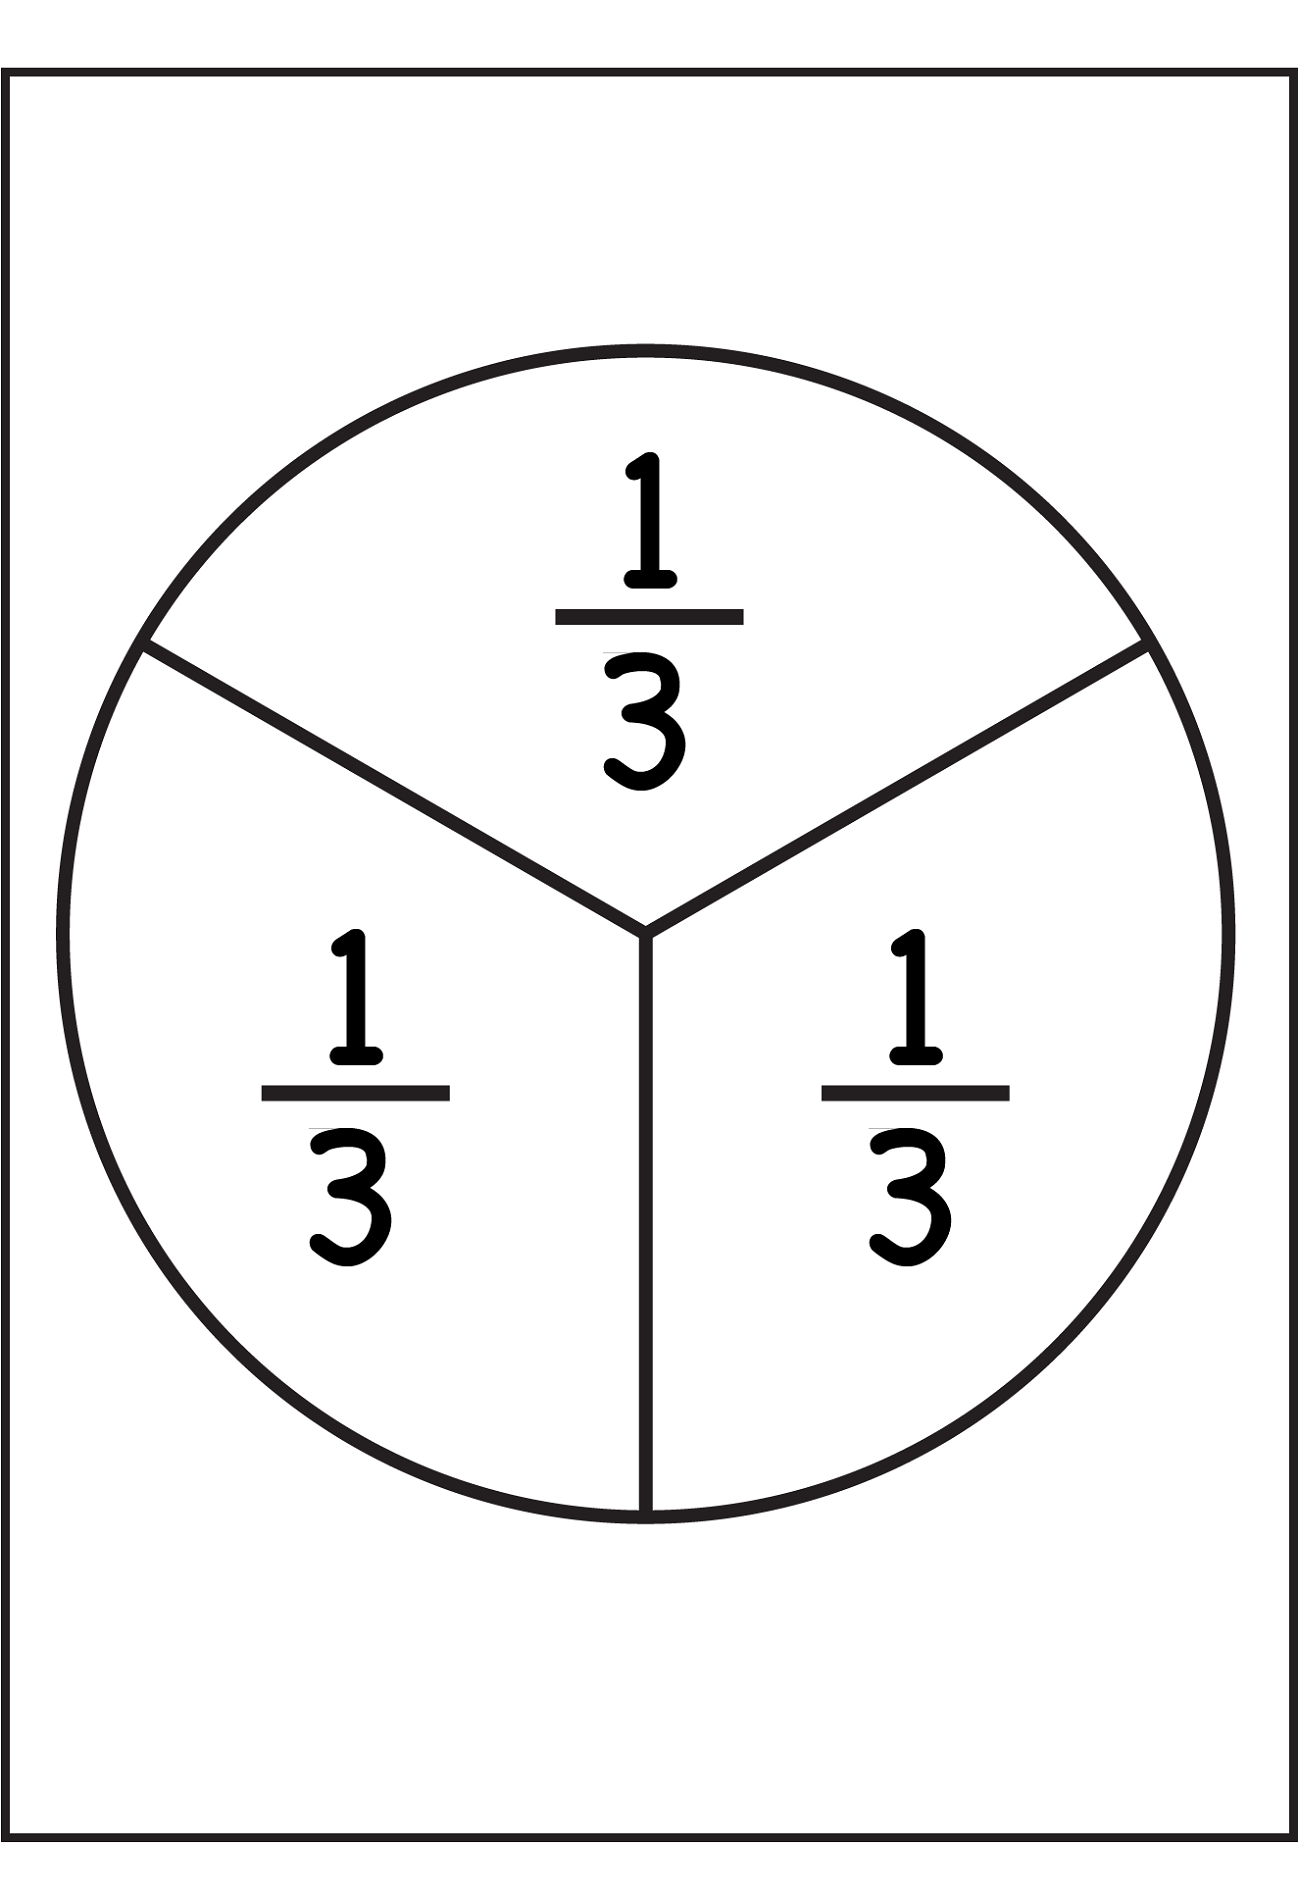 percent circle template simple